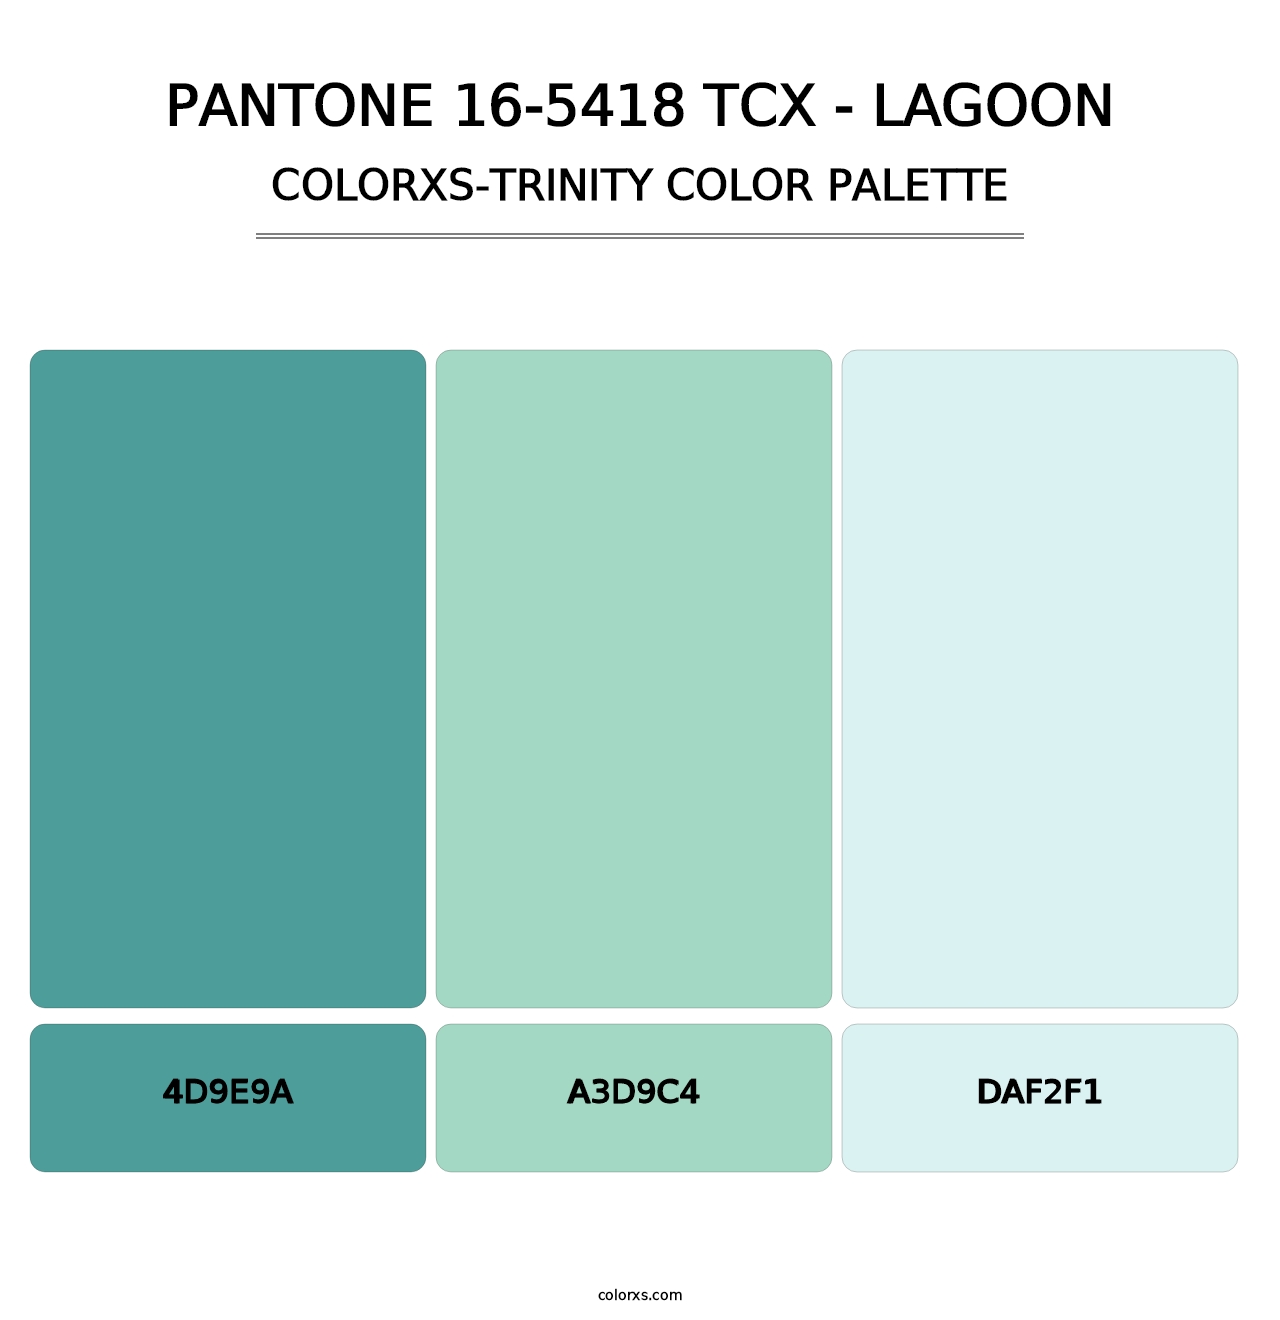 PANTONE 16-5418 TCX - Lagoon - Colorxs Trinity Palette